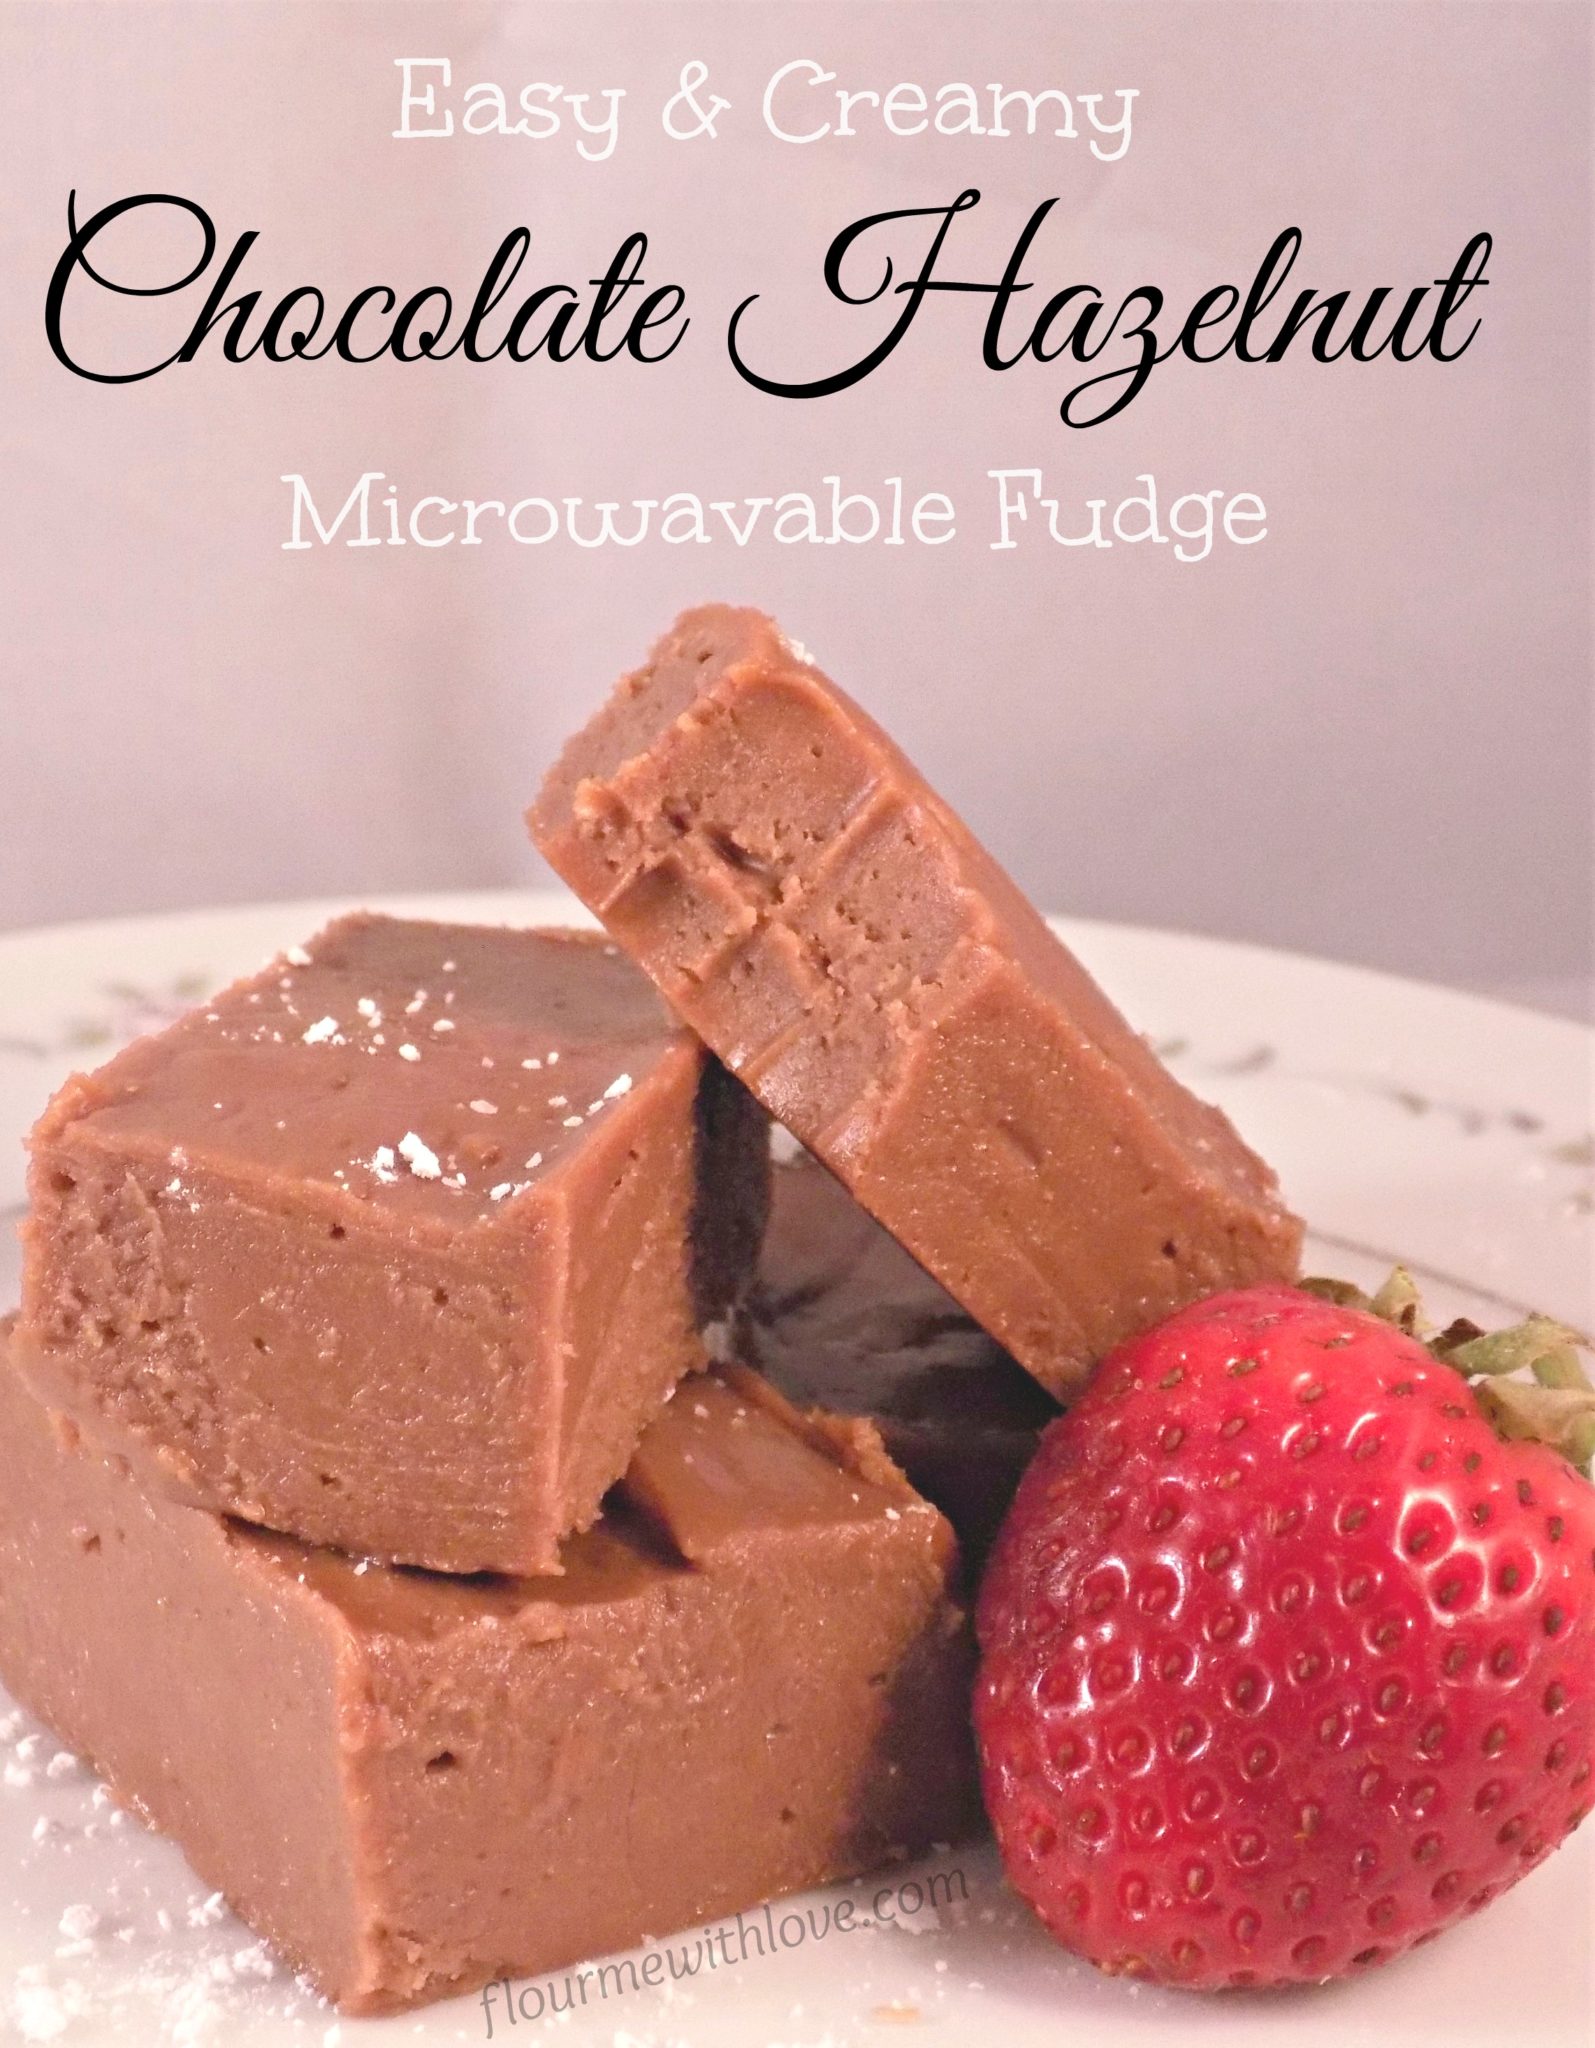 Easy Creamy Chocolate Hazelnut Fudge made in the microwave!